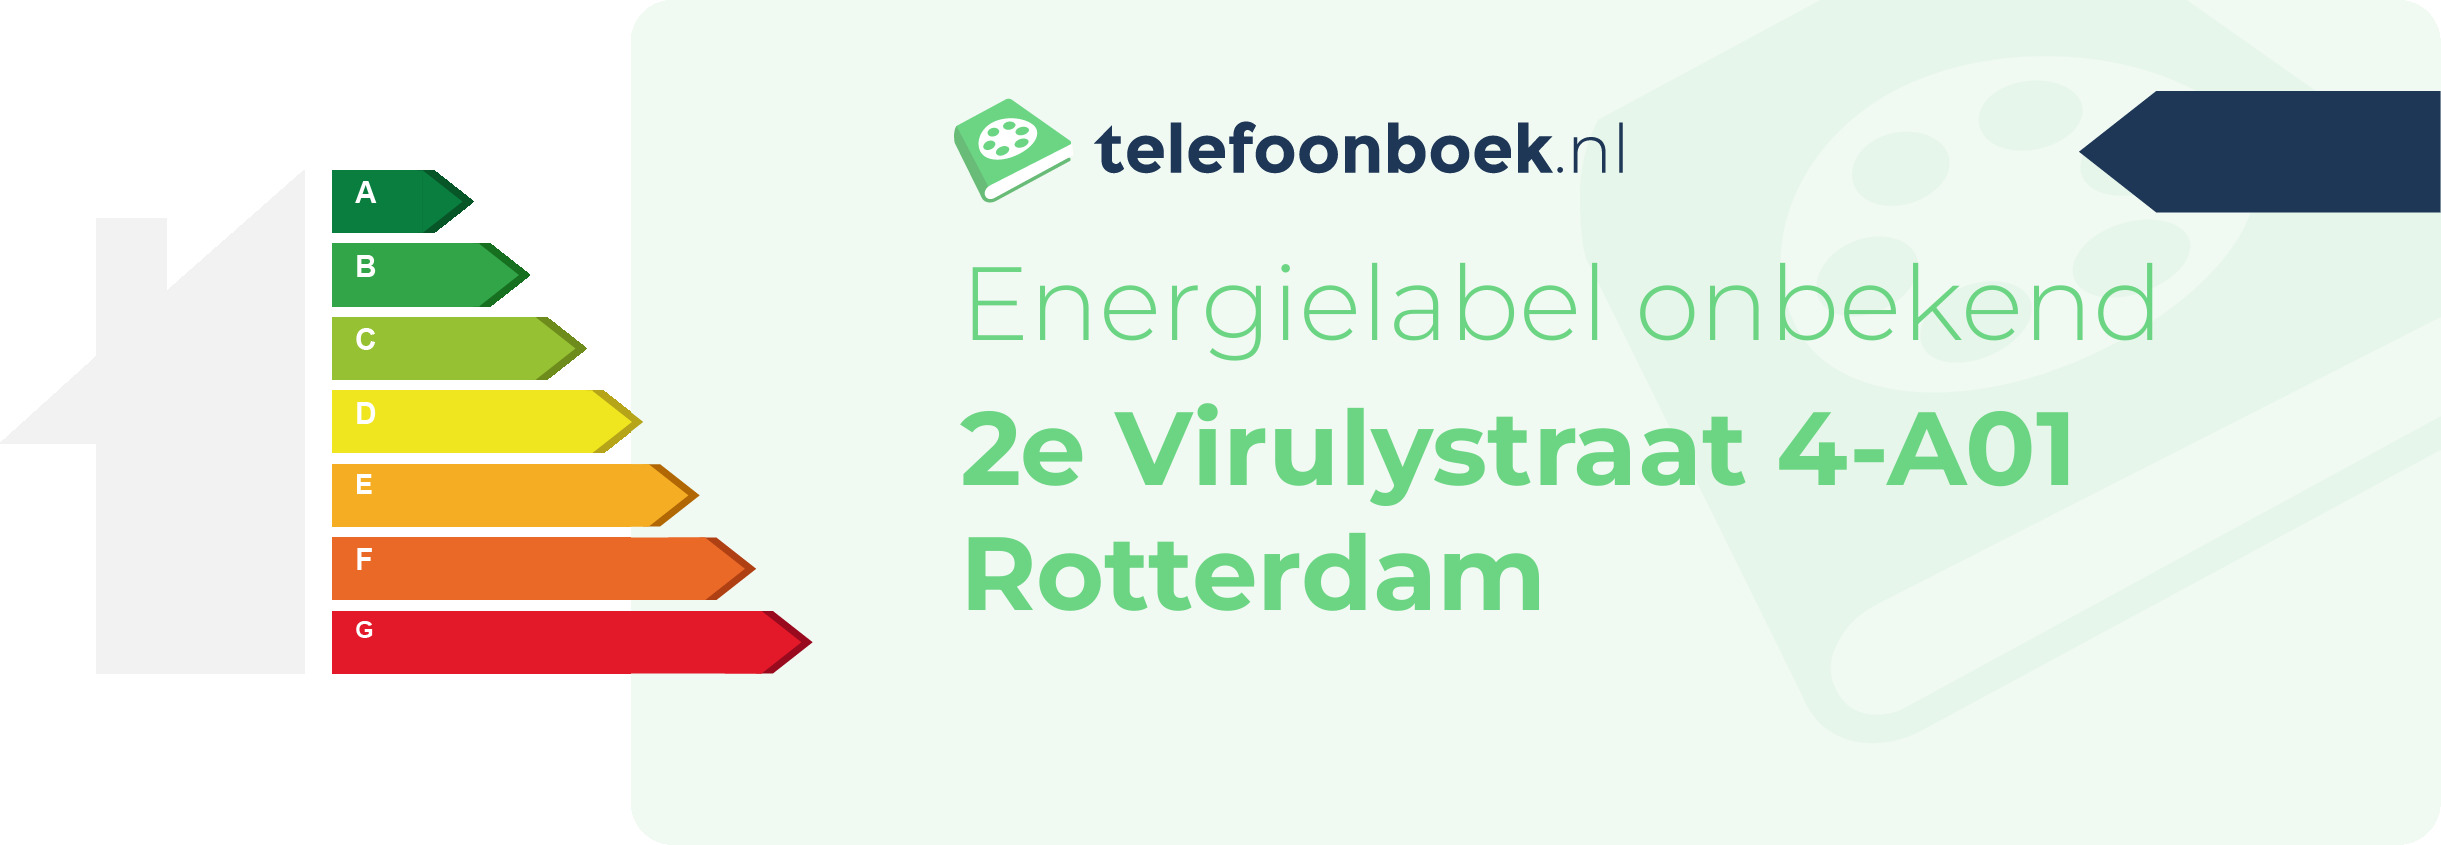 Energielabel 2e Virulystraat 4-A01 Rotterdam